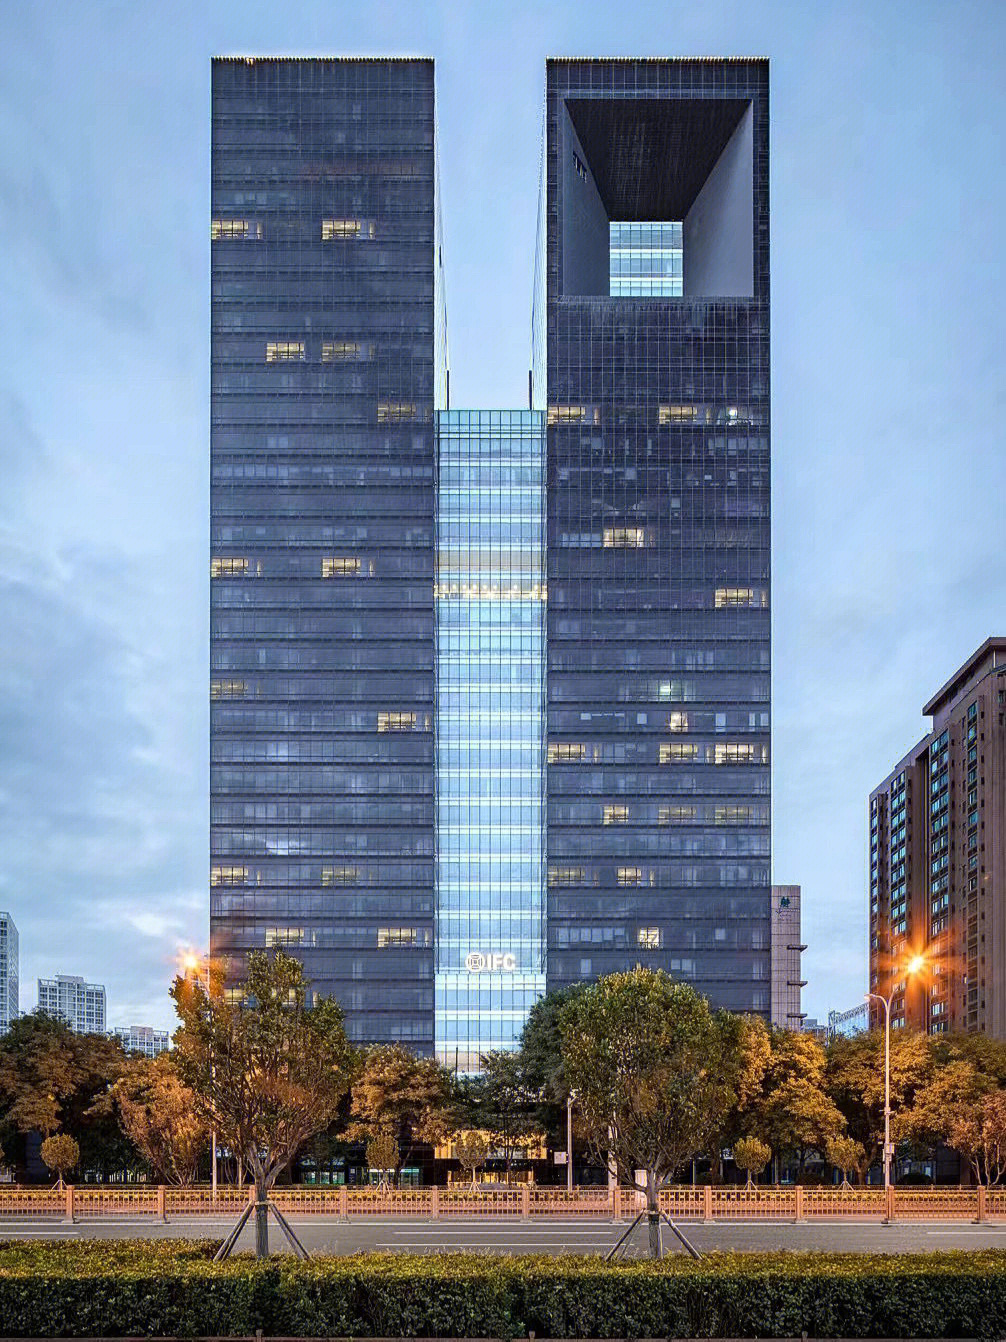 ifc北京国际金融中心图片